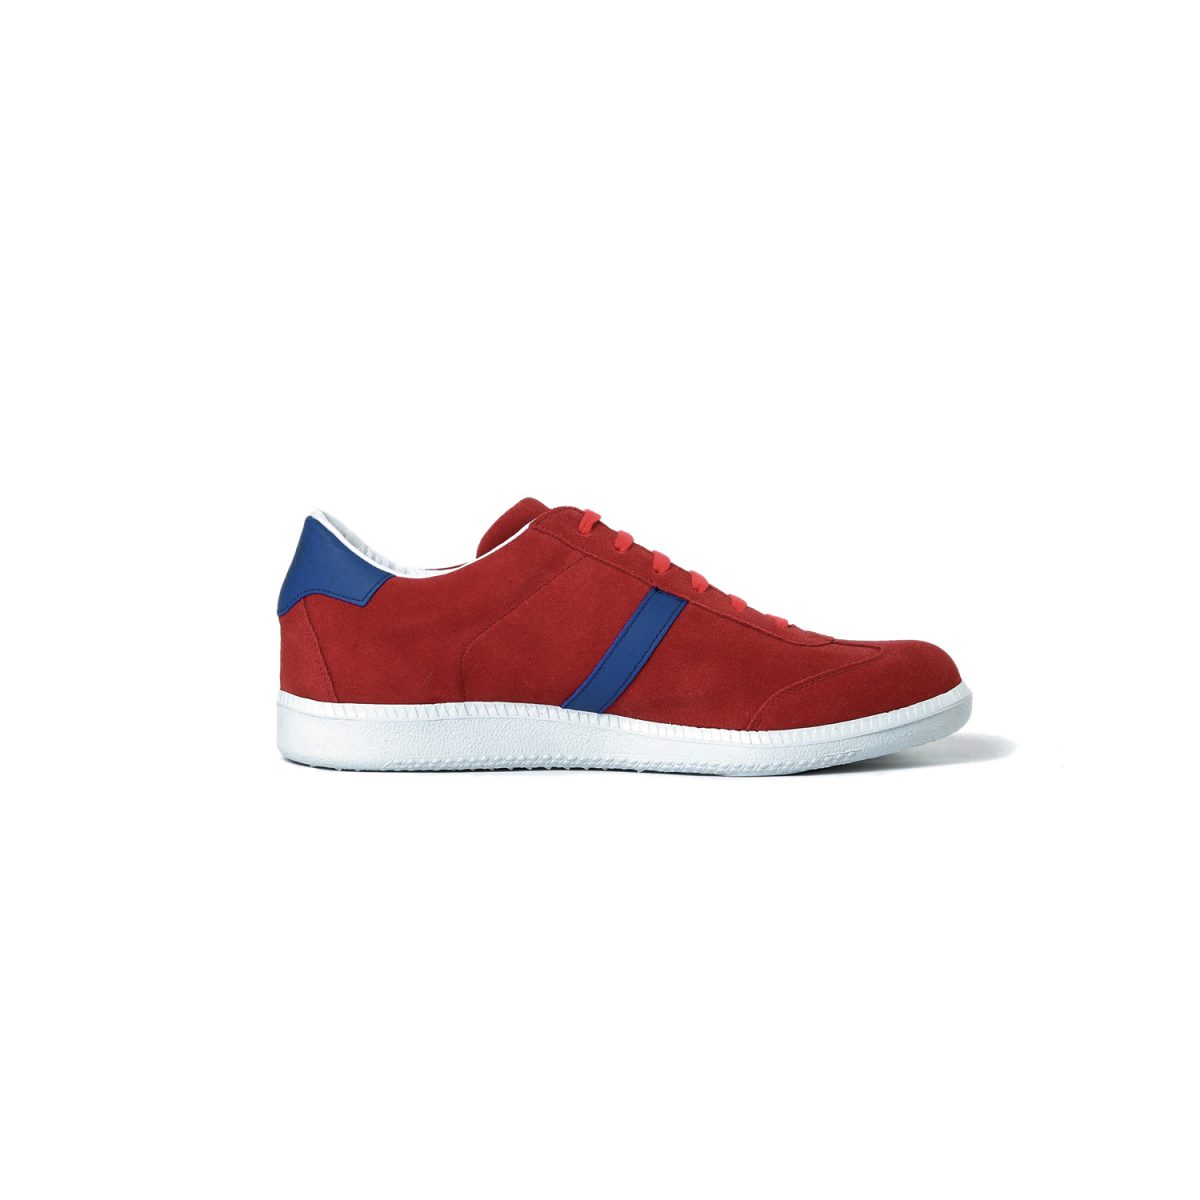 Tisza cipő - Comfort - Piros-indigó